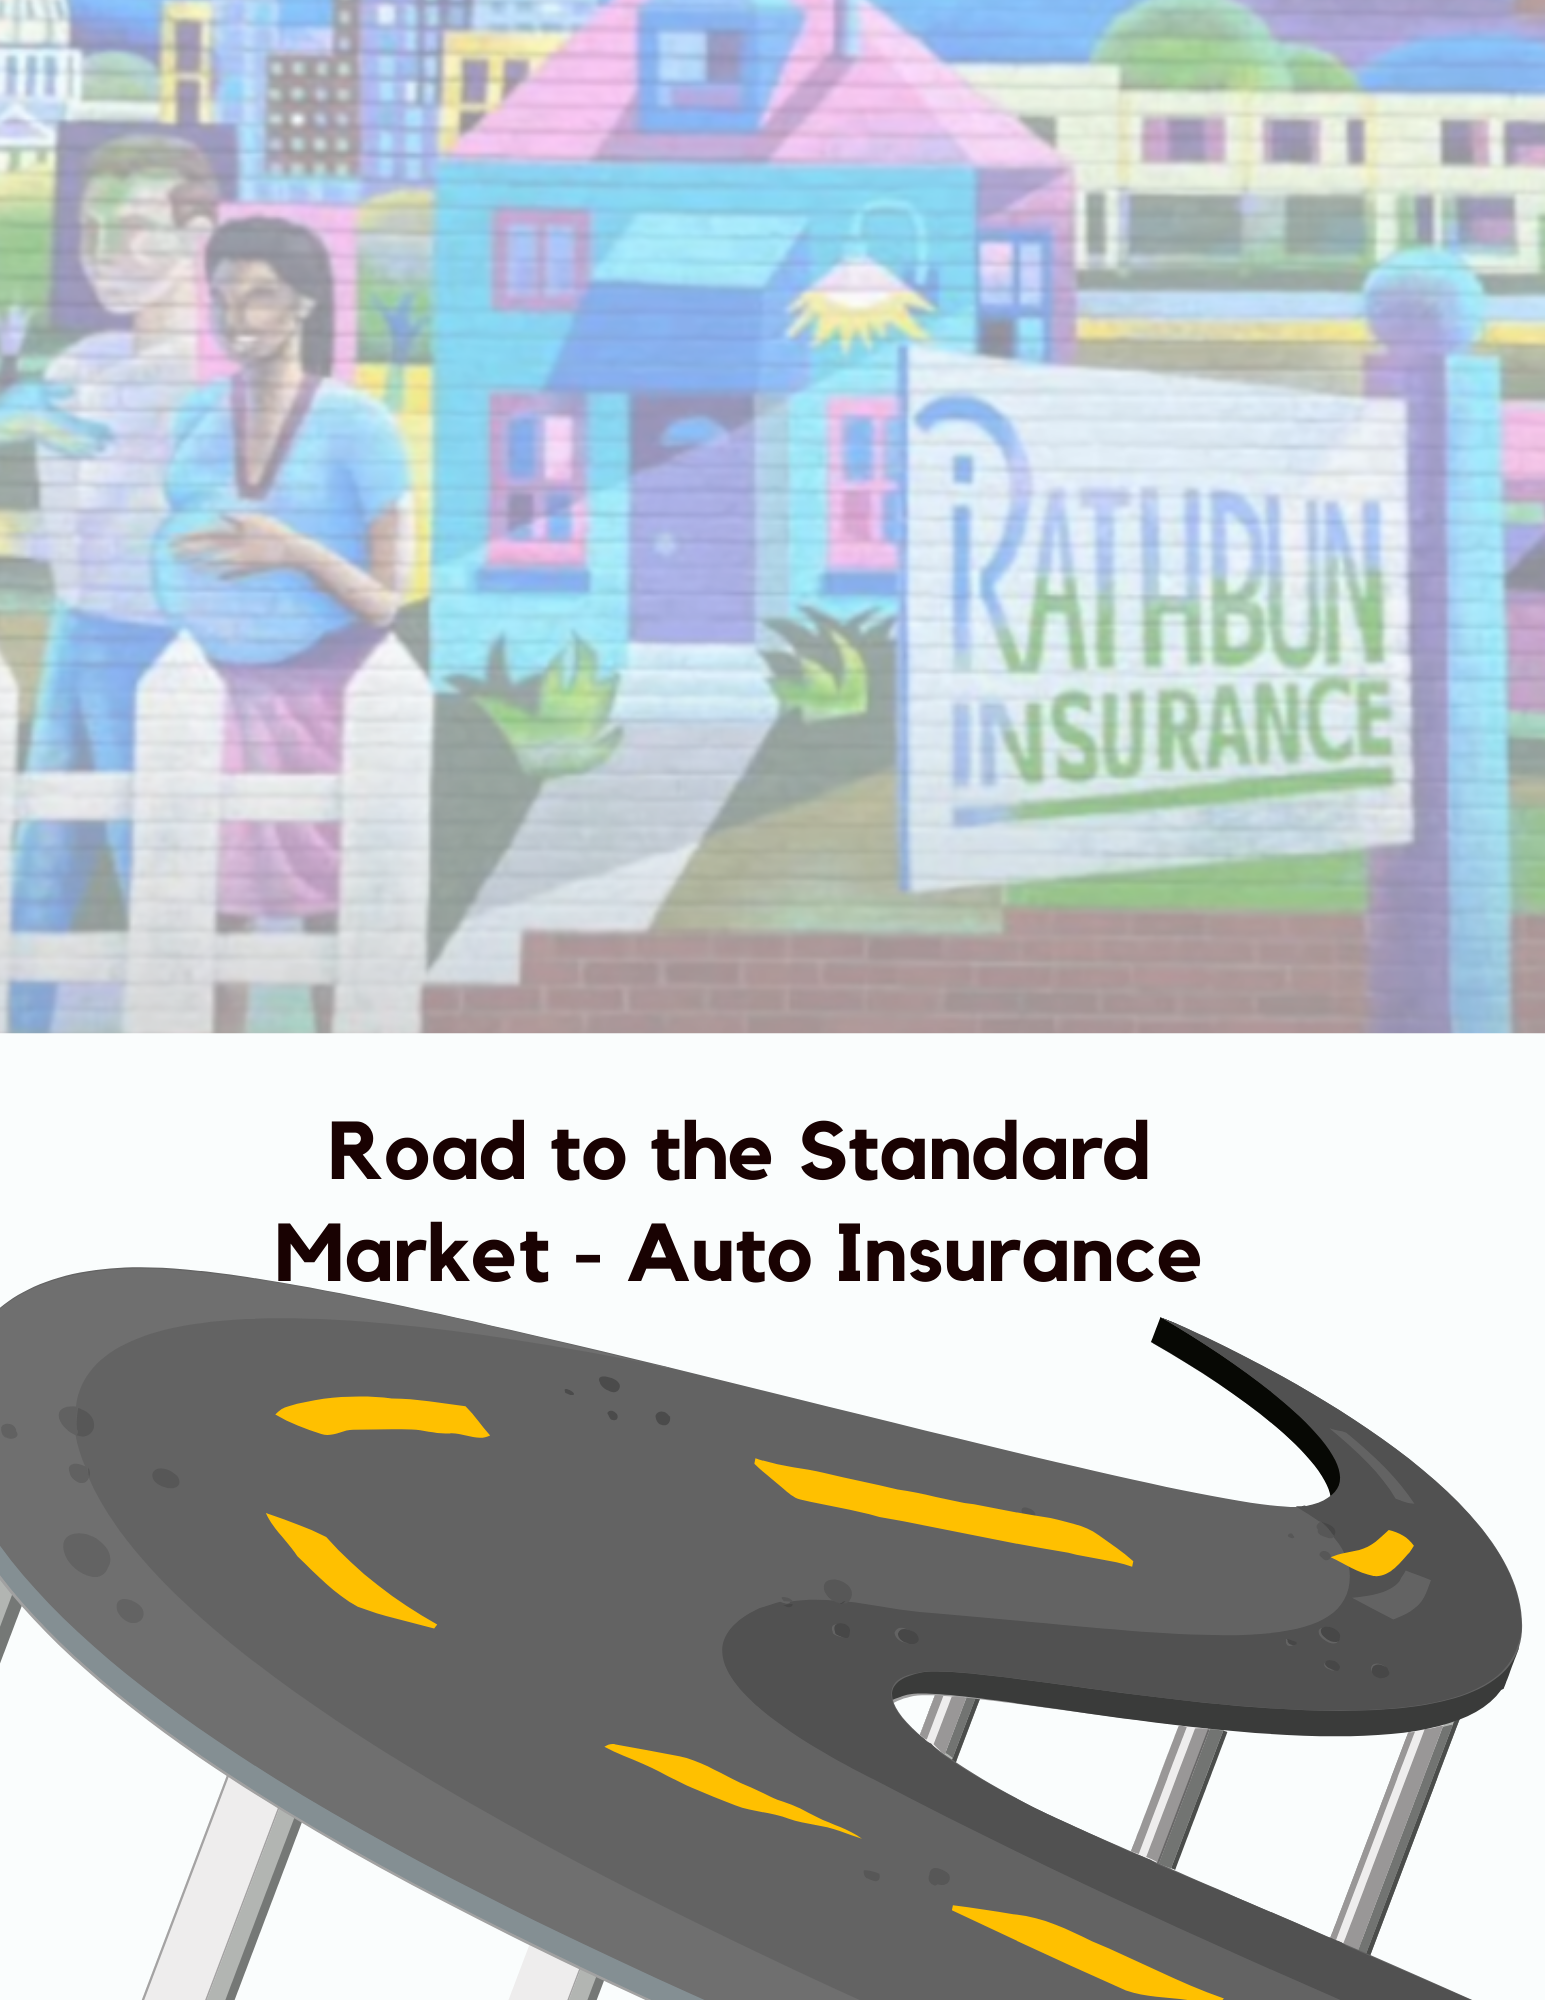 Road to Standard Auto Insurance Market